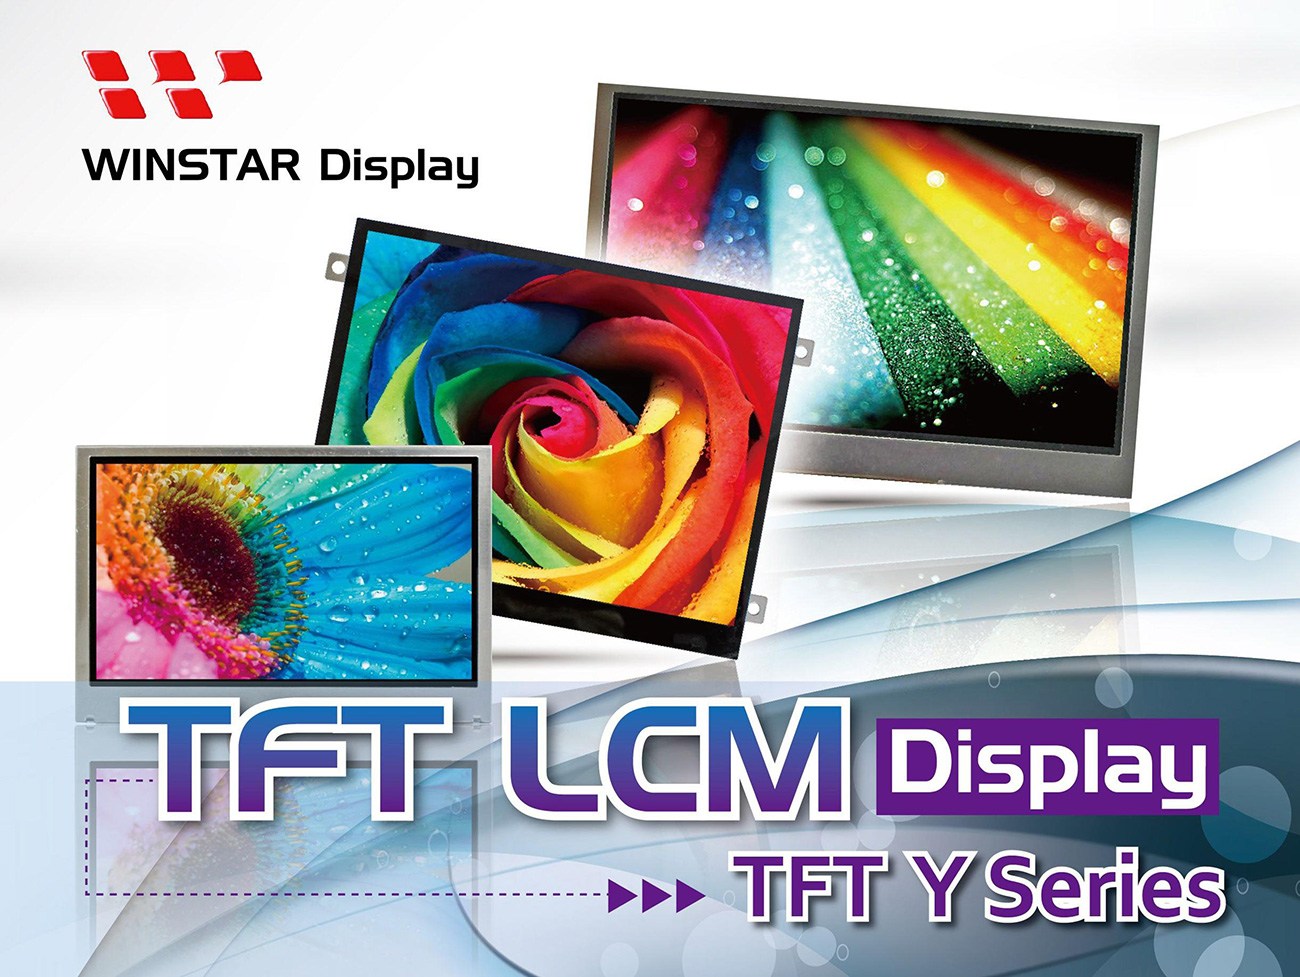 Winstar TFT Y 系列 -3.5吋tft顯示器,4.3吋tft顯示器,5.7吋tft顯示器,7吋tft顯示器,3.5吋tft lcd模組,4.3吋tft lcd模組,5.7吋tft lcd模組,7吋tft lcd模組